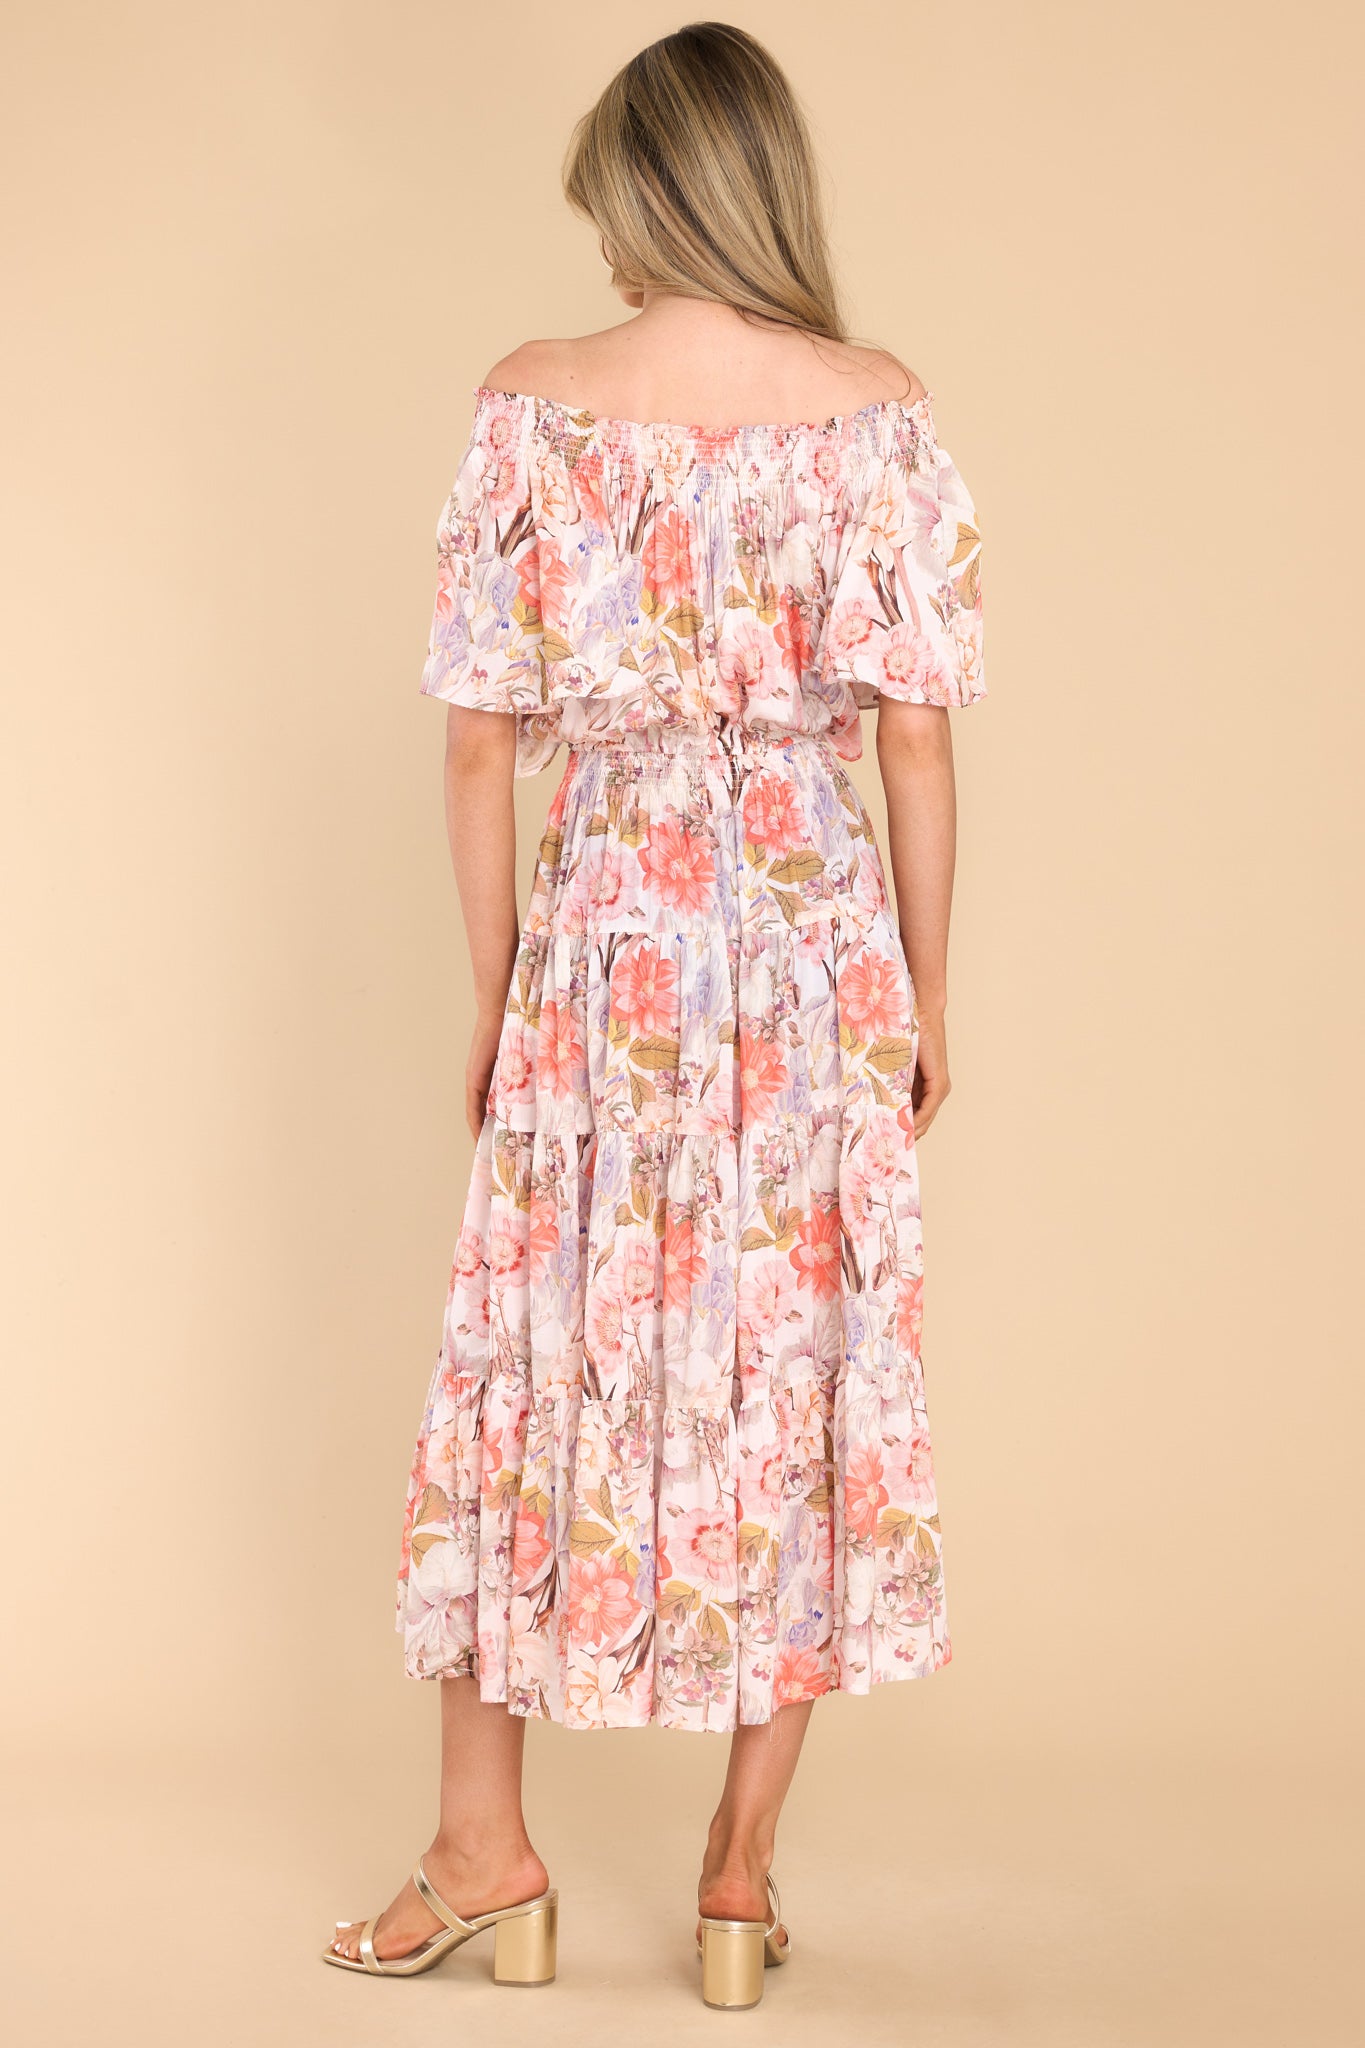 11 Will It To Be Taupe Multi Floral Print Maxi Dress at reddress.com